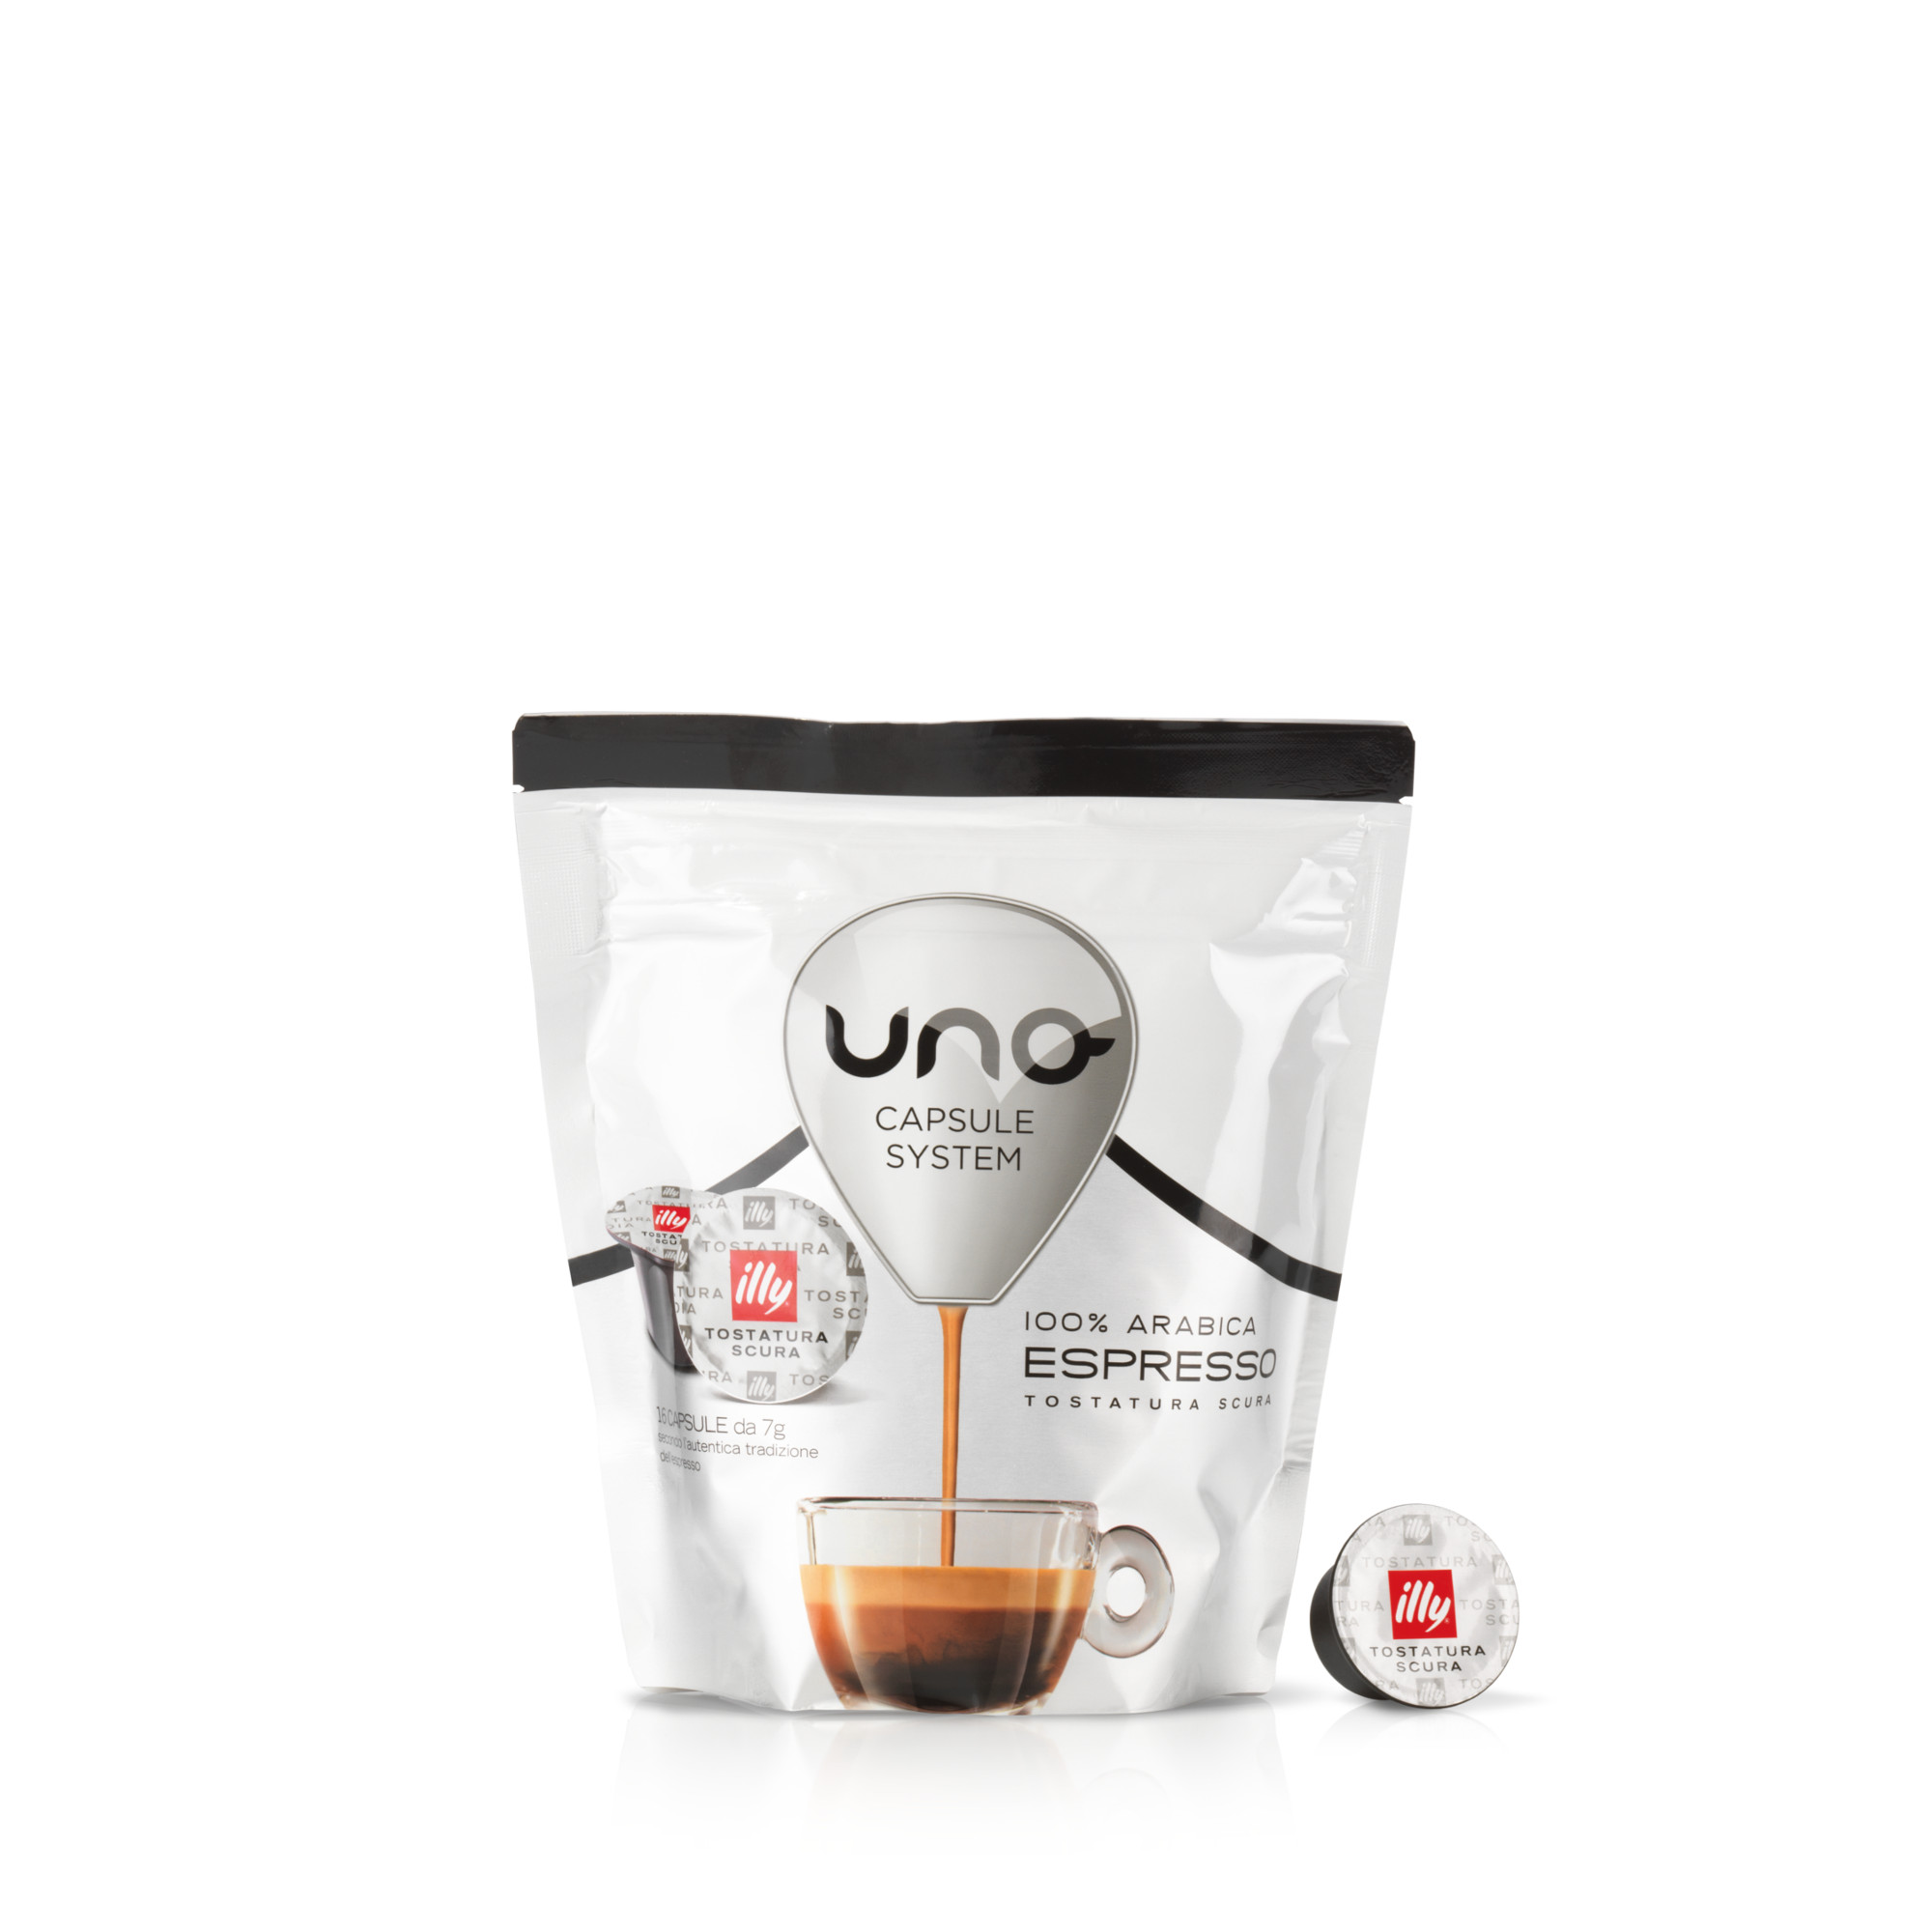 Capsule UNO system Caffè tostatura Forte